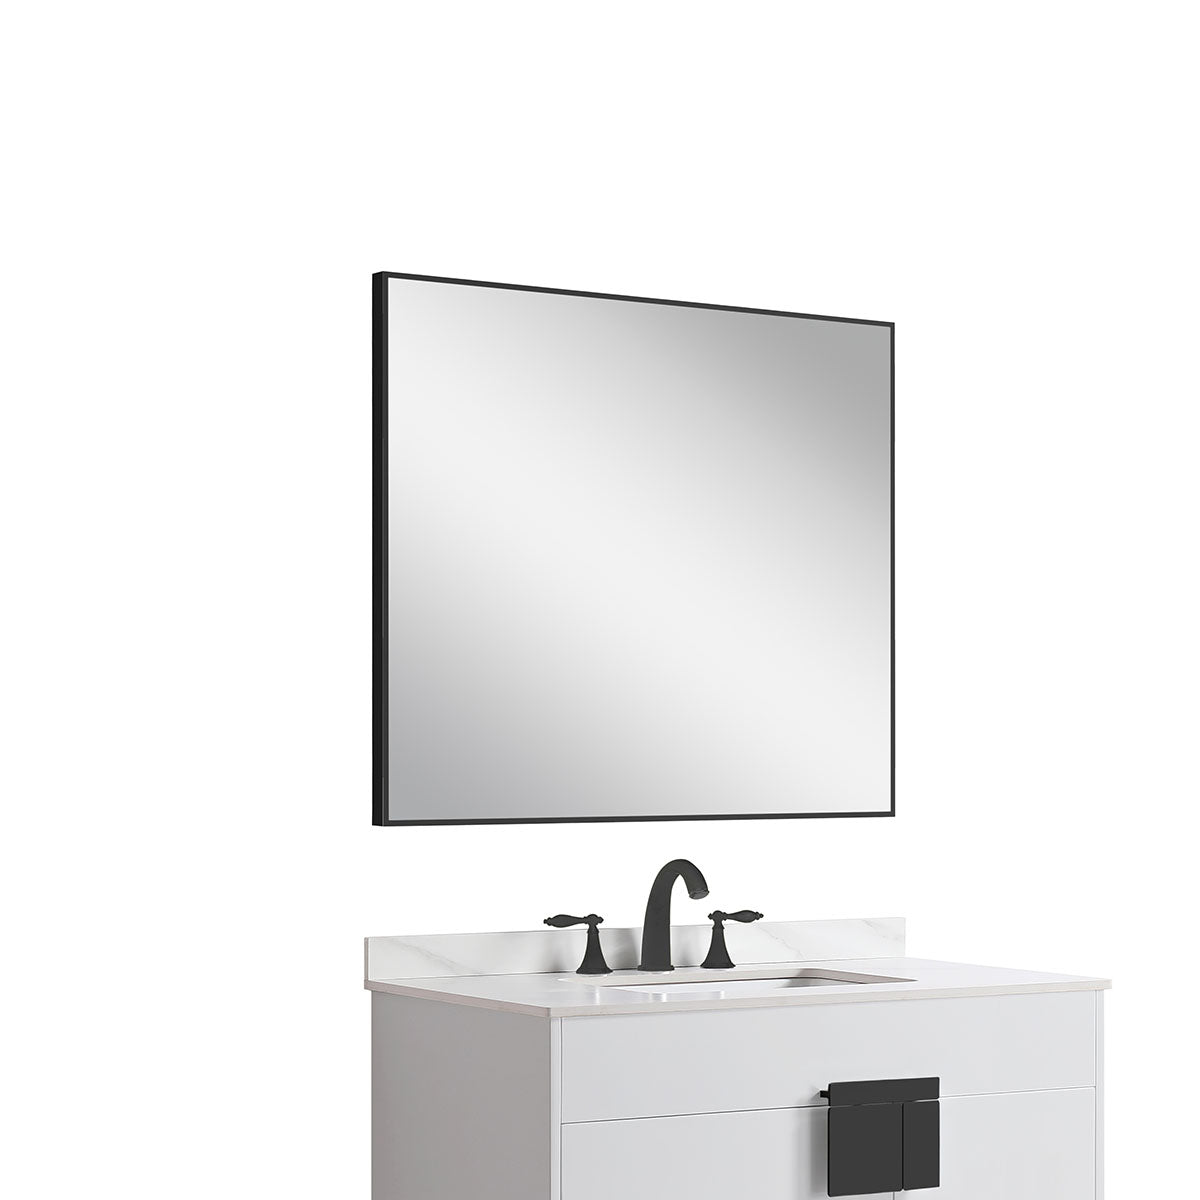 36"w x 32"h Aluminum Rectangle Bathroom Wall Mirror (Matte Black) - iStyle Bath